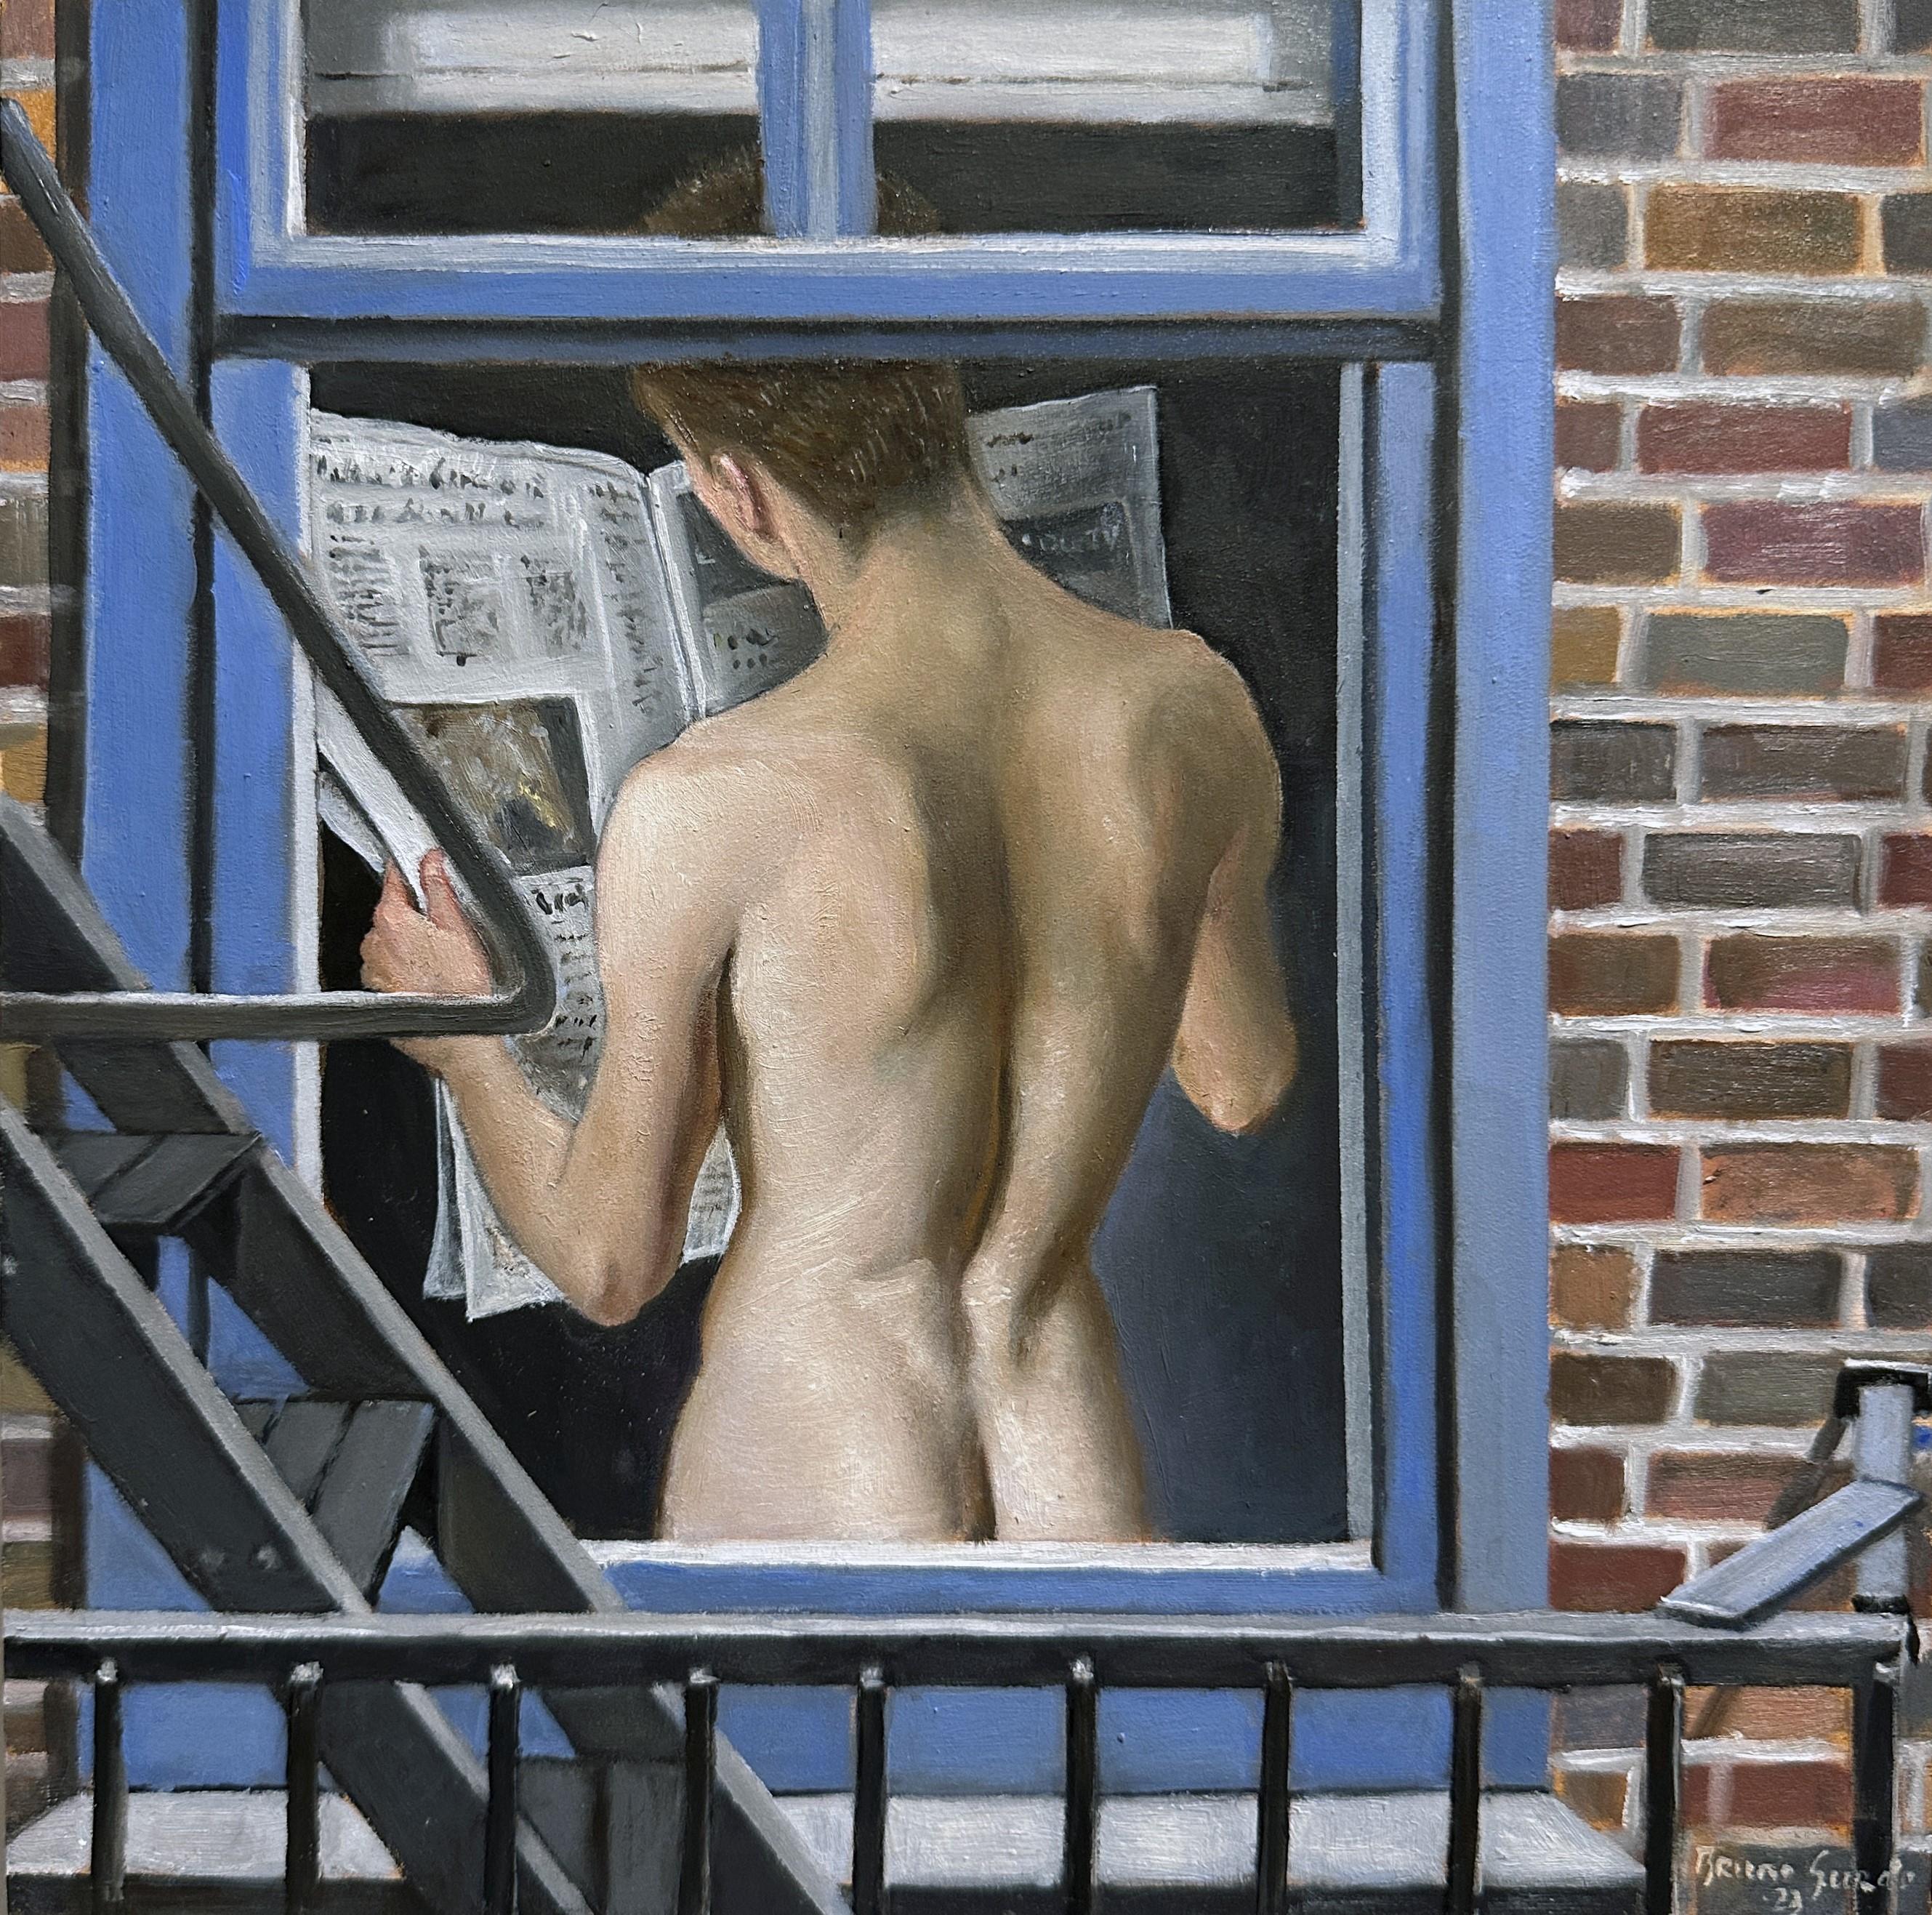 Bruno Surdo Nude Painting – Morning News - Voyeuristic View of Nude männlicher Torso Through the Fire Escape 